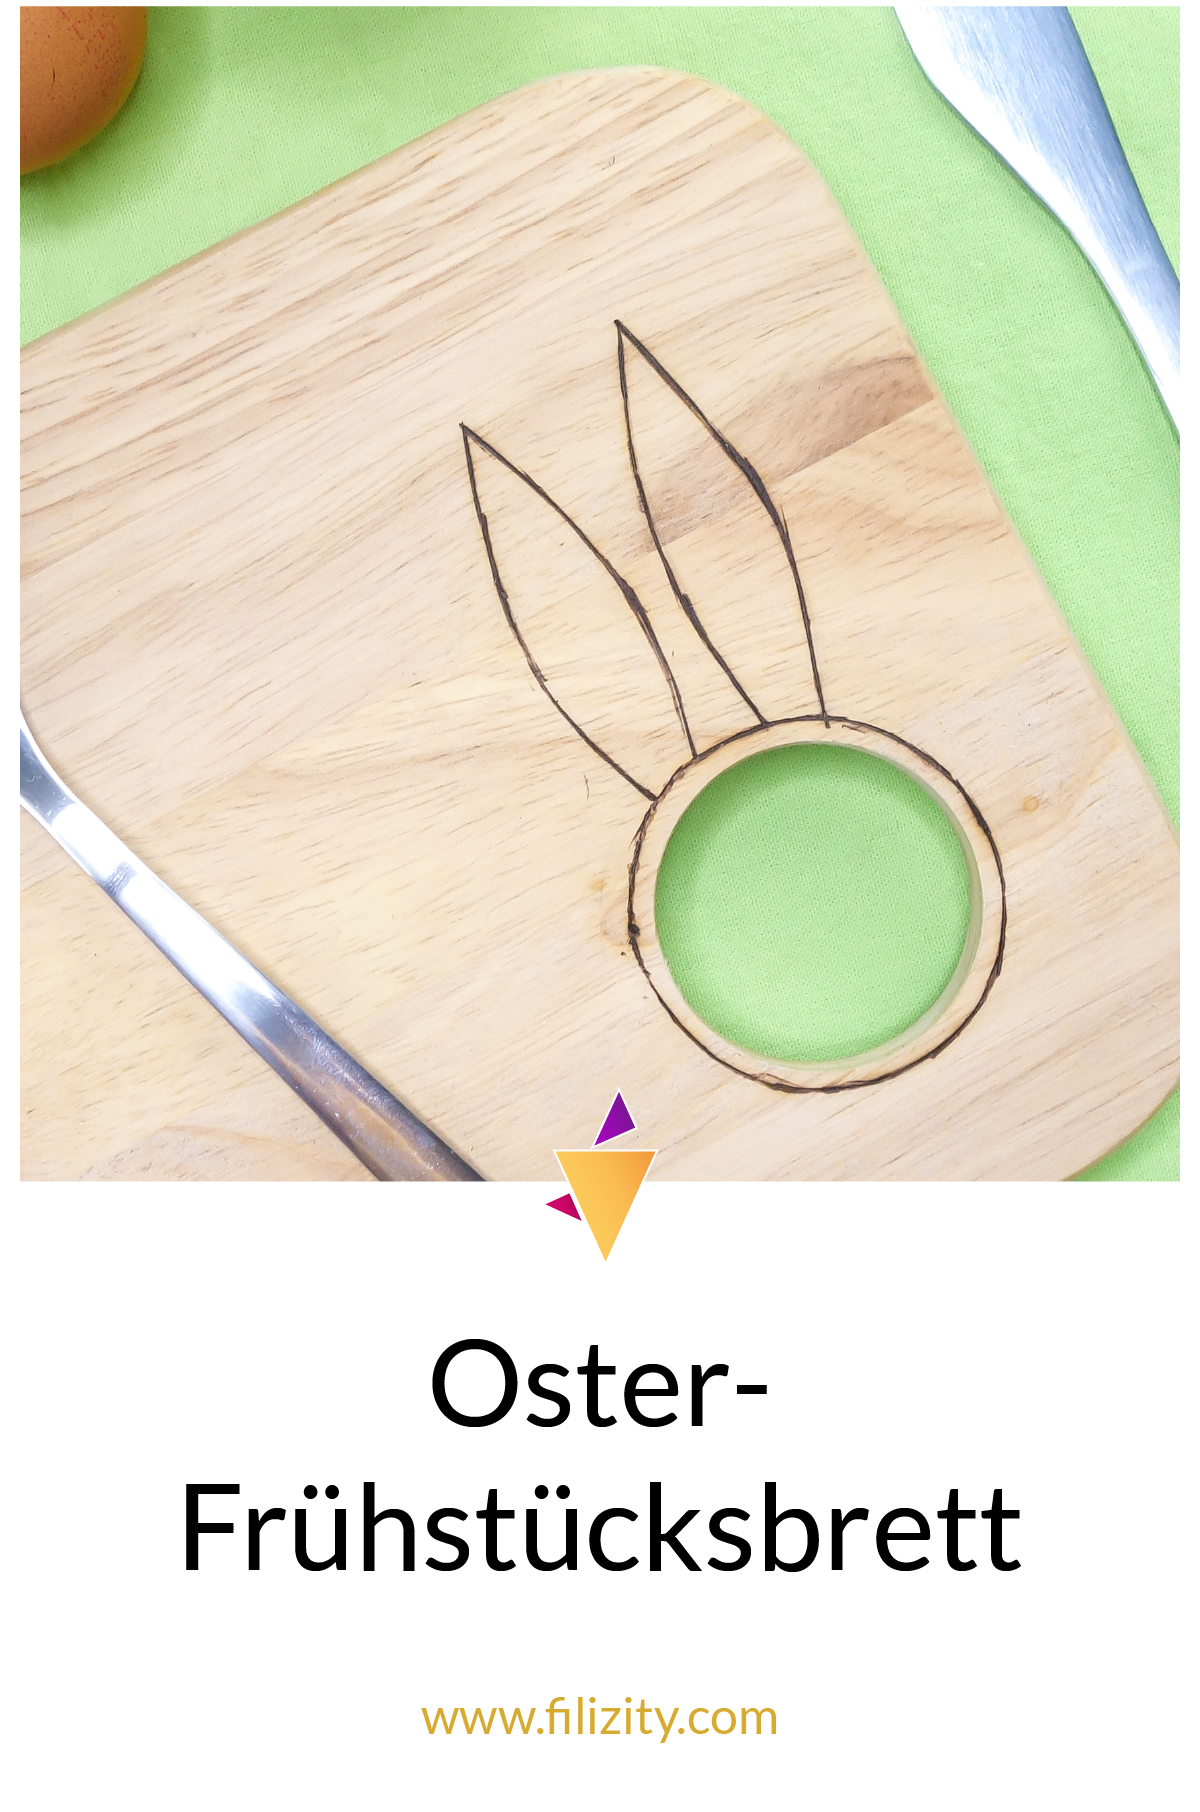 Selbst gemachtes Oster-Frühstücksbrett mit Eierbecher und Hasenohren Brandmalerei | Filizity.com - Kreativmagazin &DIY Blog